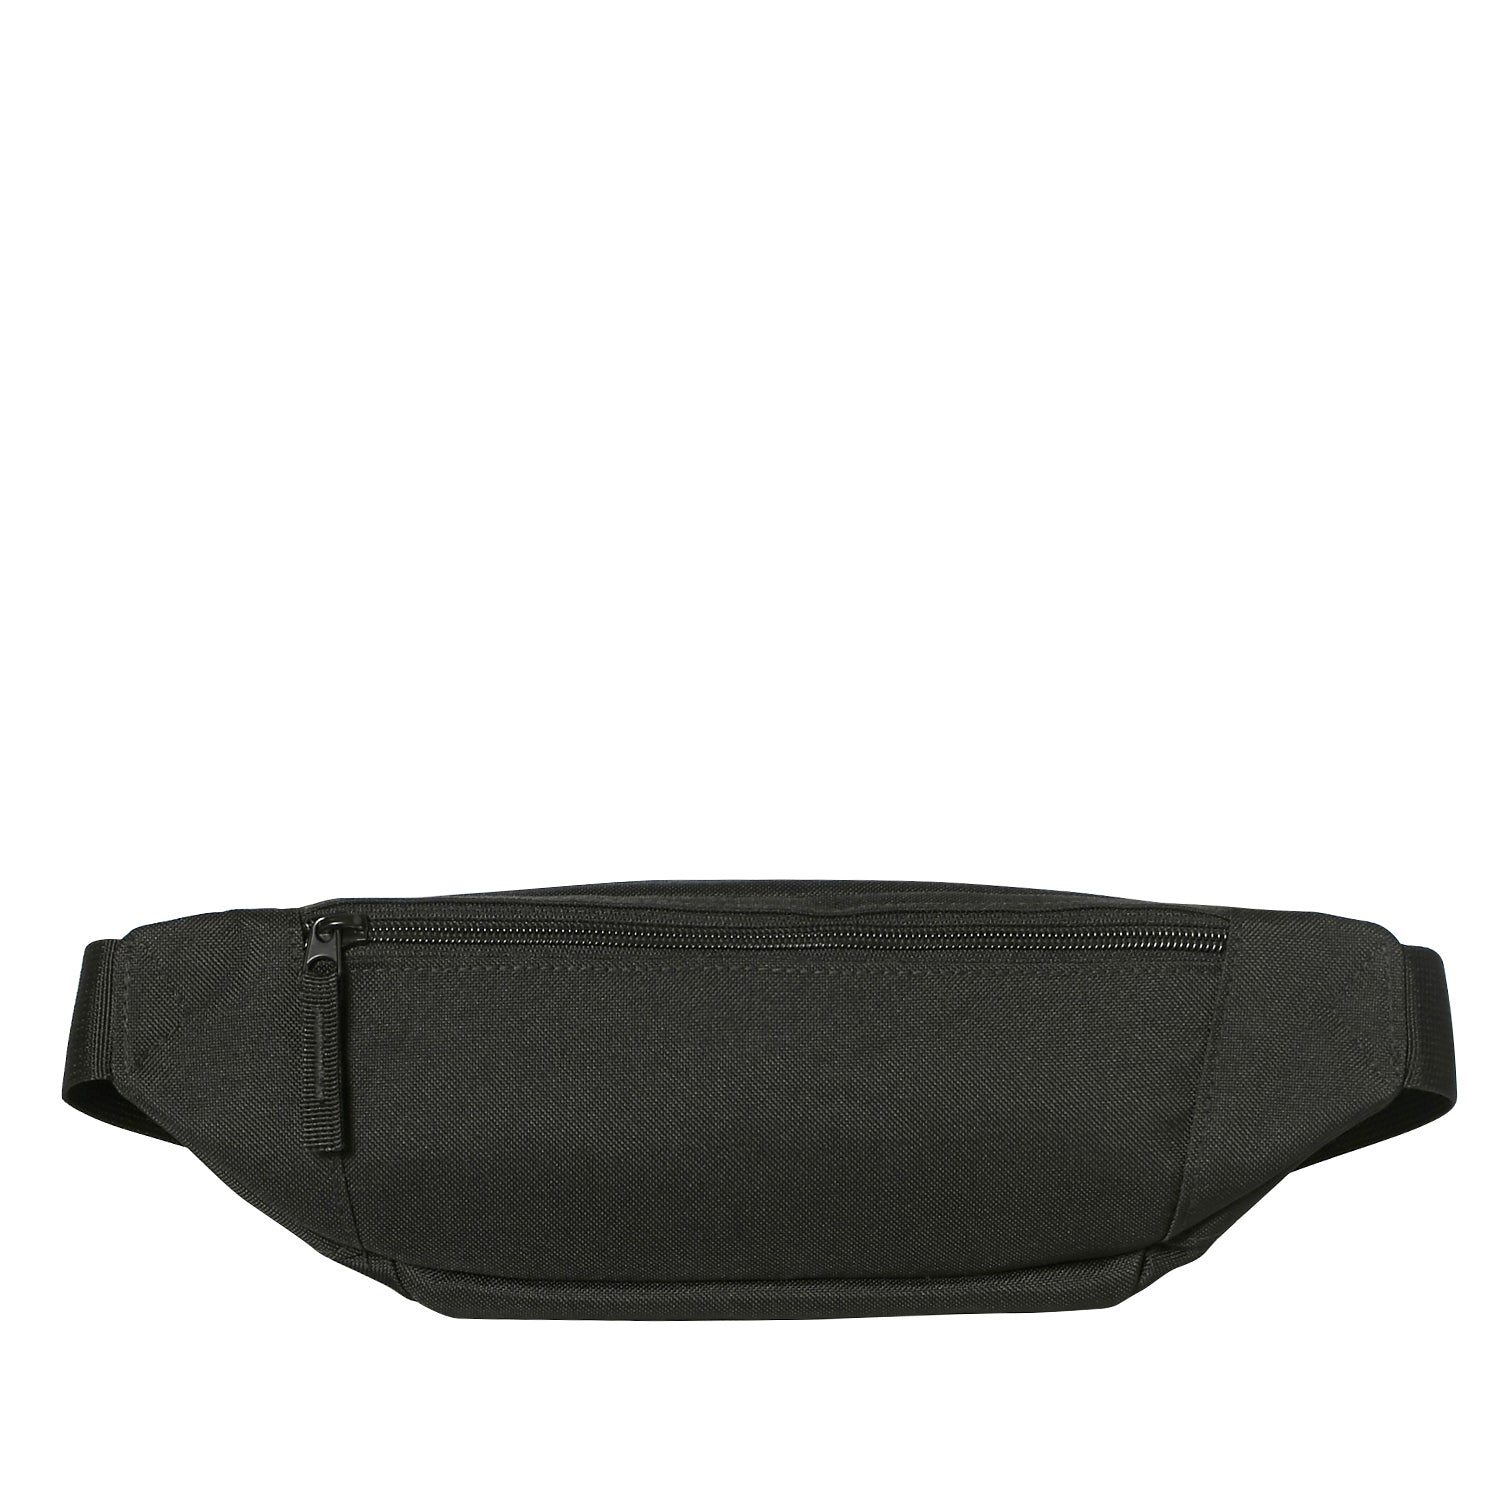 CAT - 83615-01 PROJECT waist bag - Black - 0